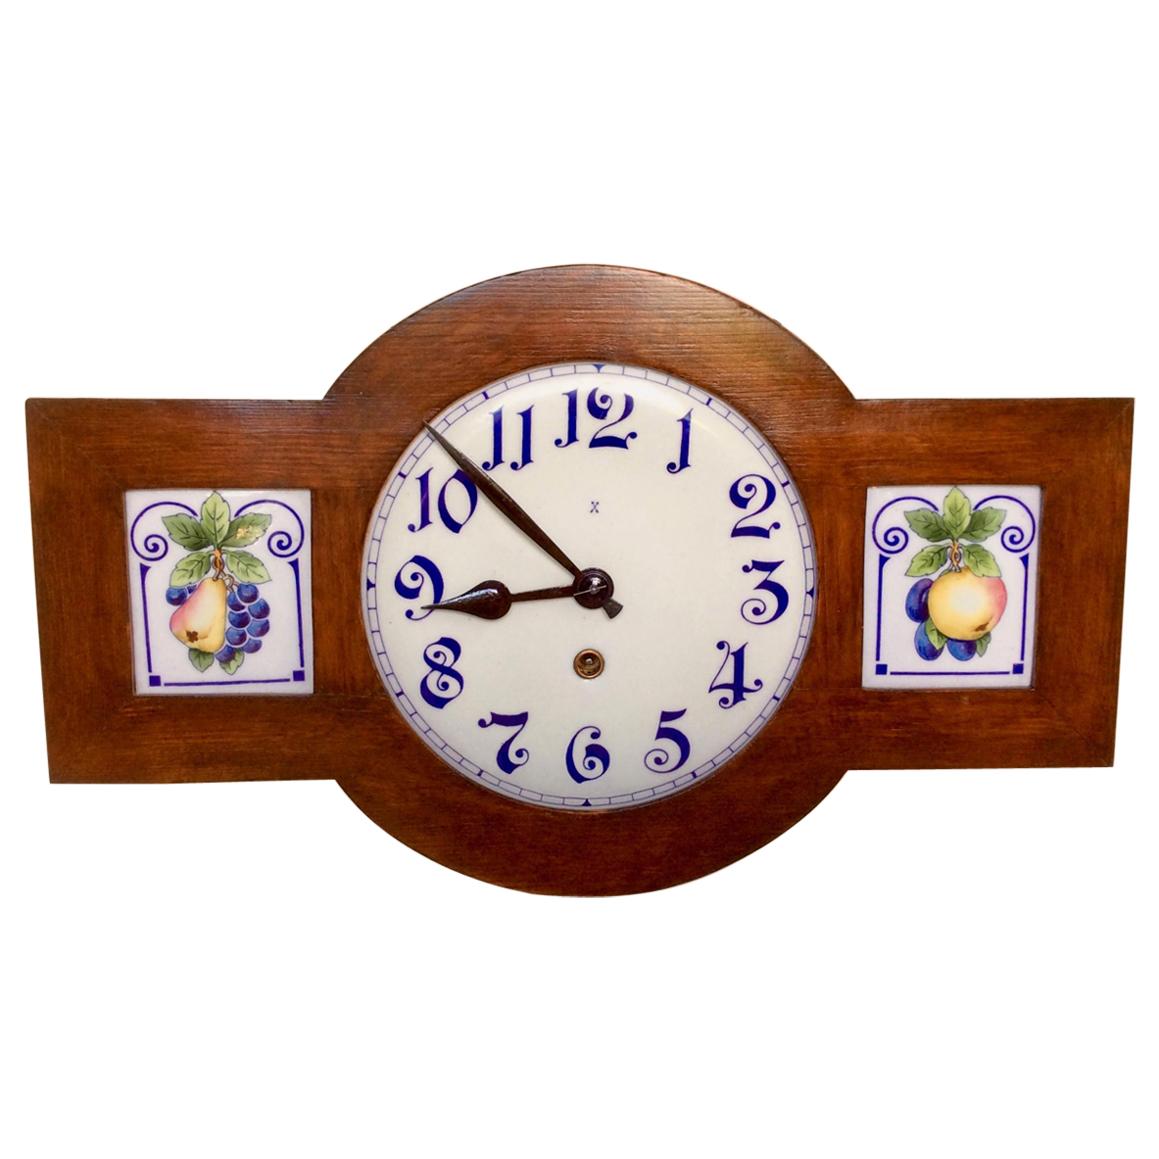 Late 19th Century Wall Clock